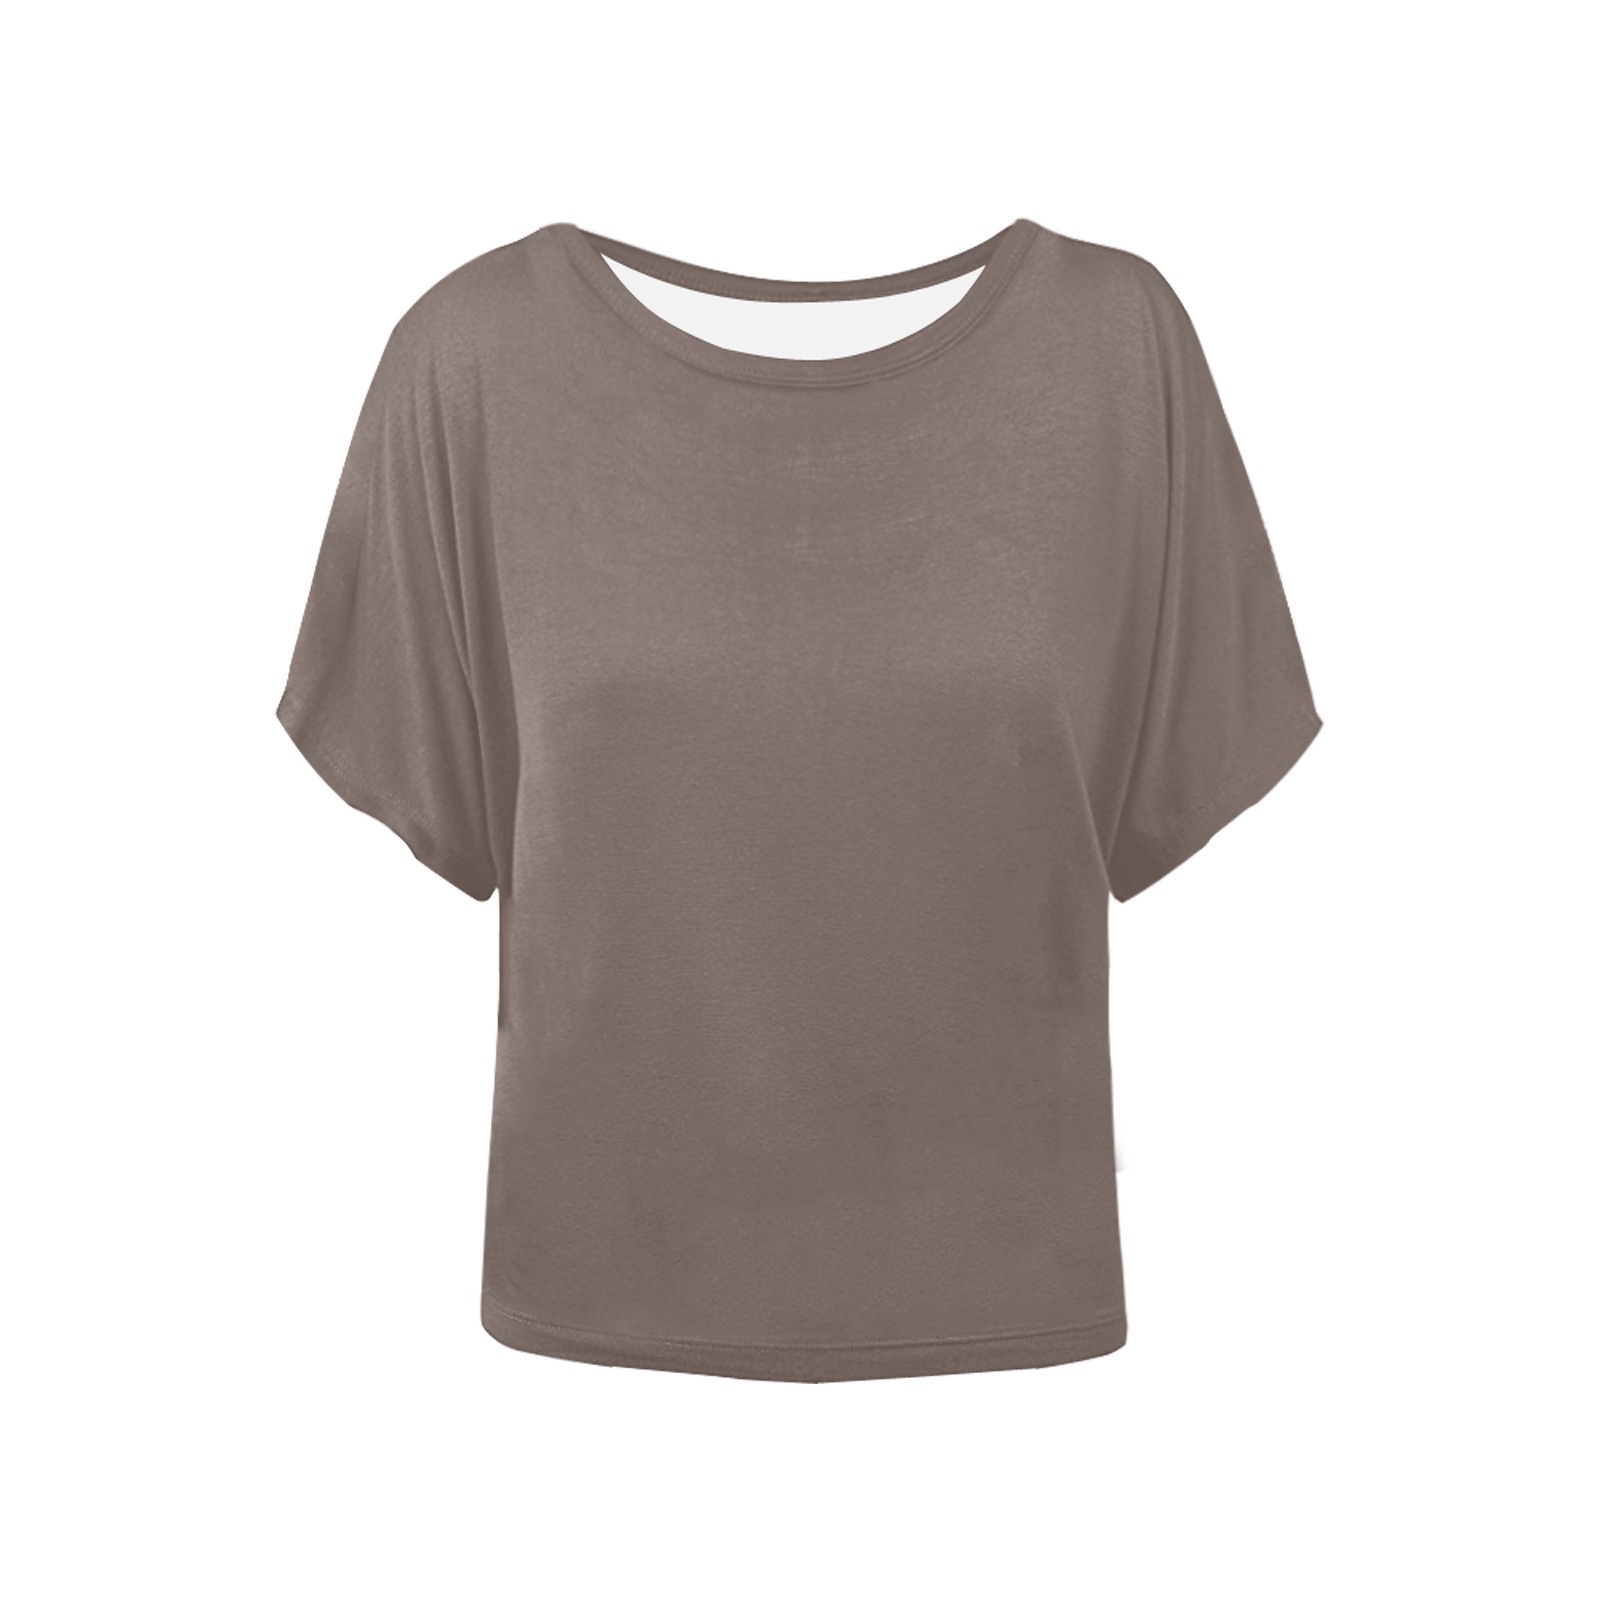 Coffee Quartz Women's Batwing-Sleeved Blouse T shirt (Model T44)